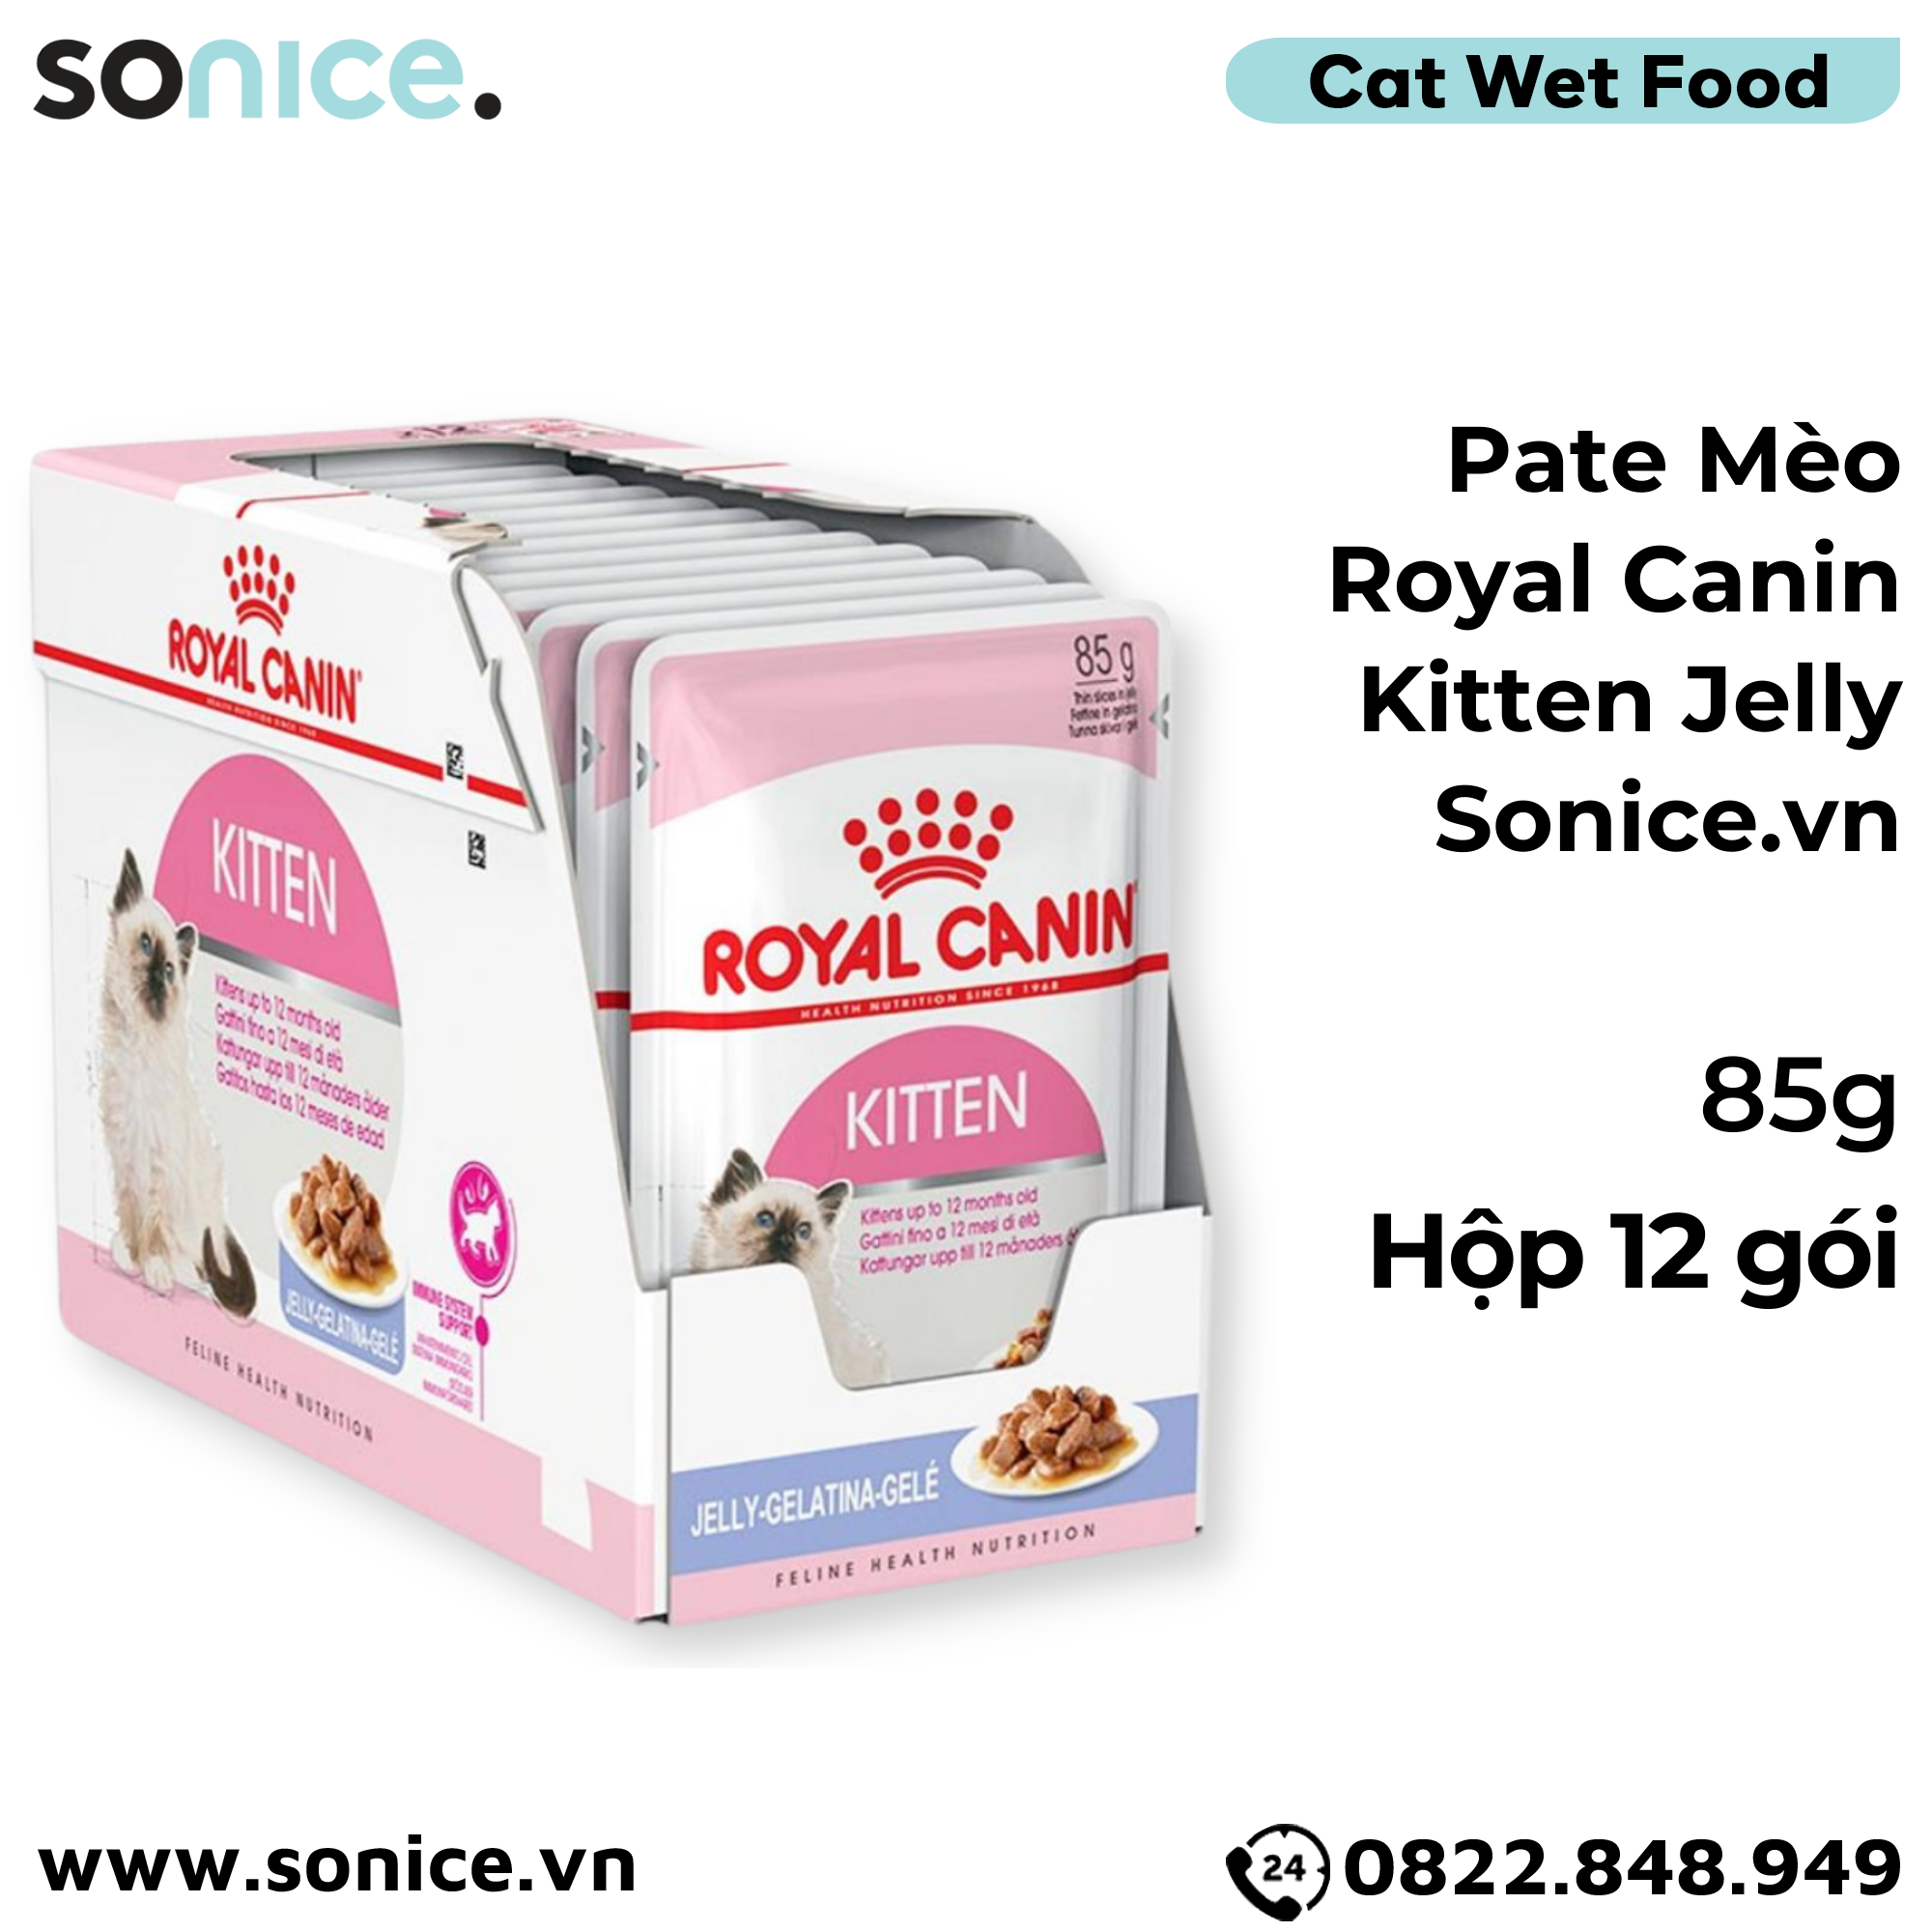  Pate mèo Royal Canin Kitten Jelly 85g - Hộp 12 gói SONICE. 